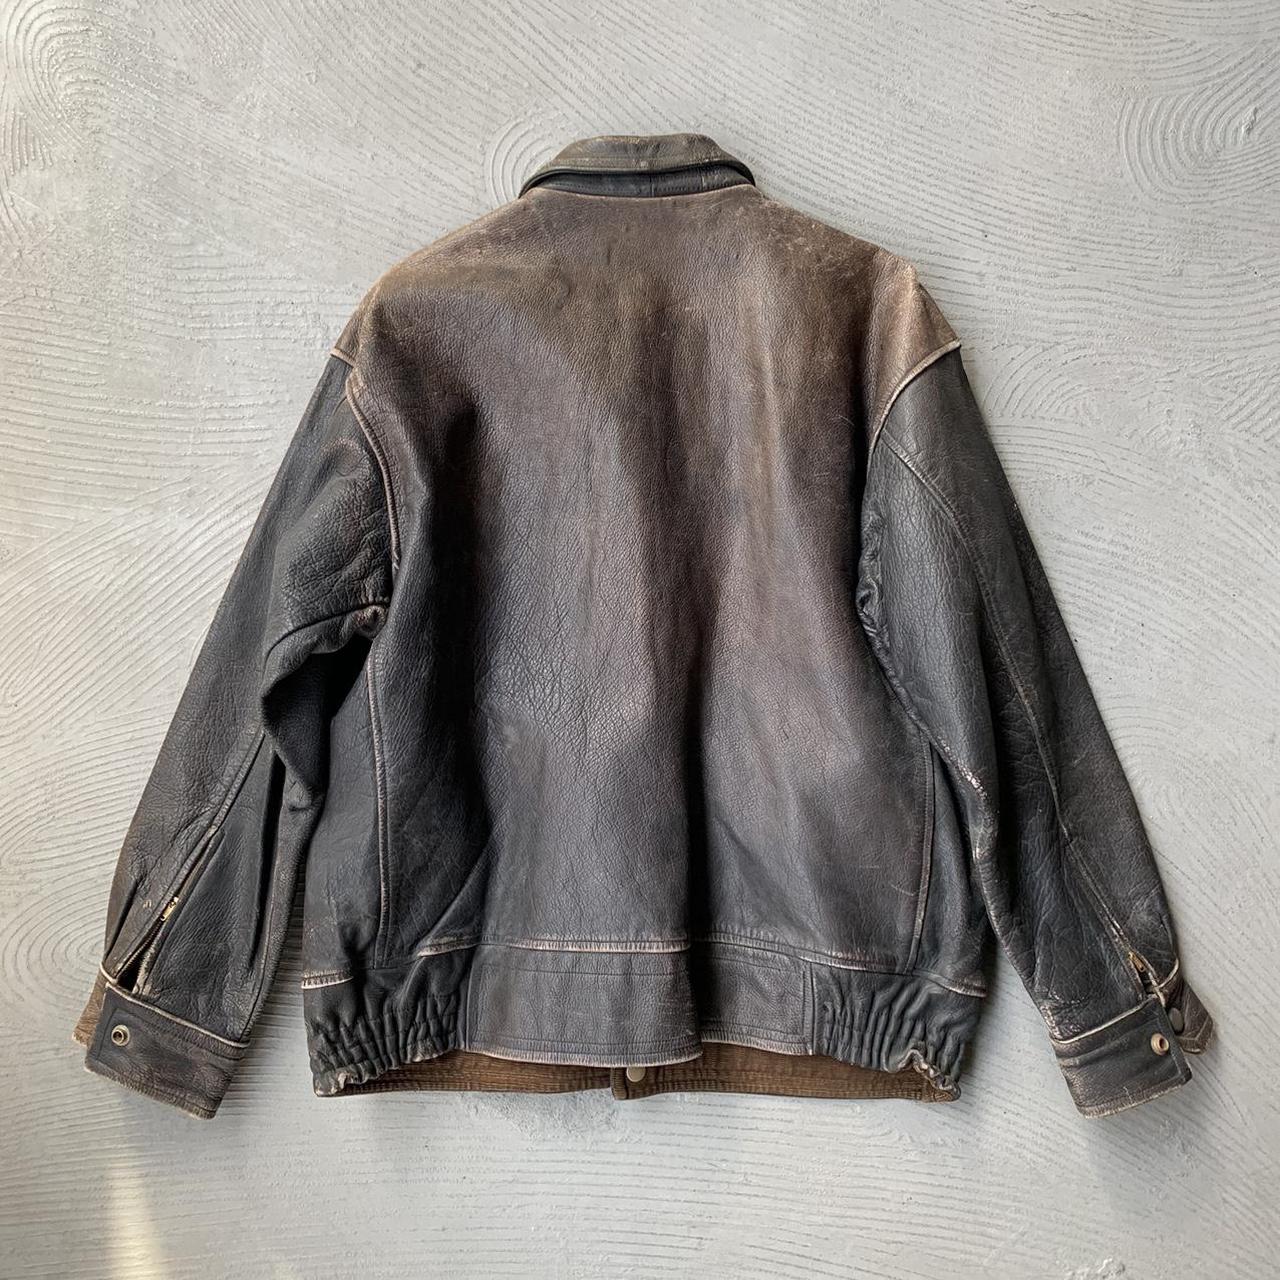 50's Japanese vintage leather jacket It's a valuable... - Depop